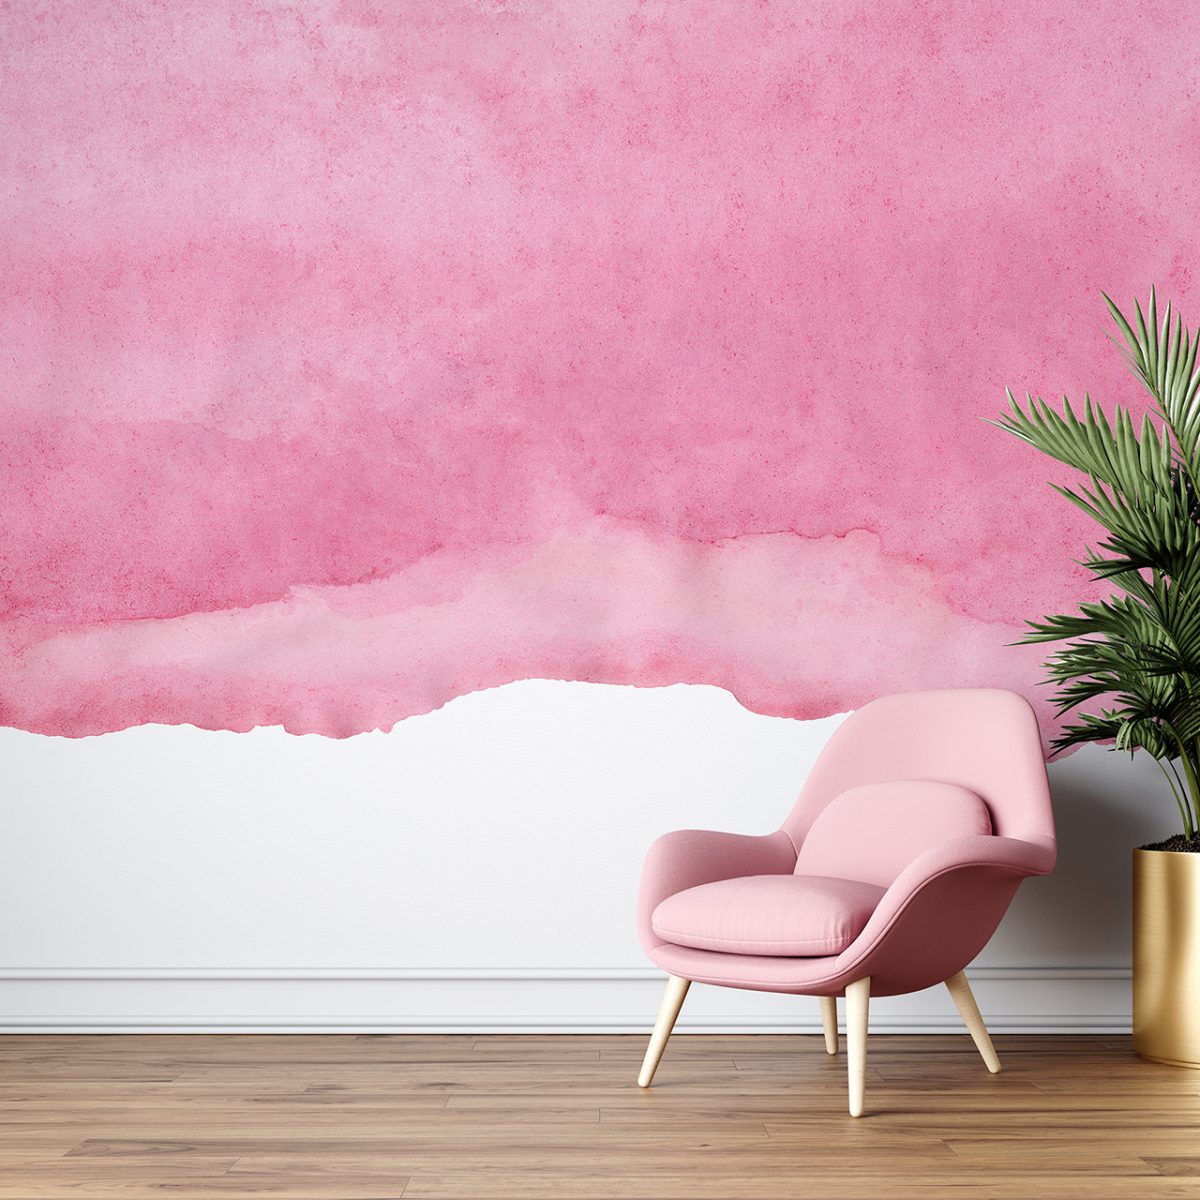 Pink Flow Watercolor Effect Wallpaper Mural